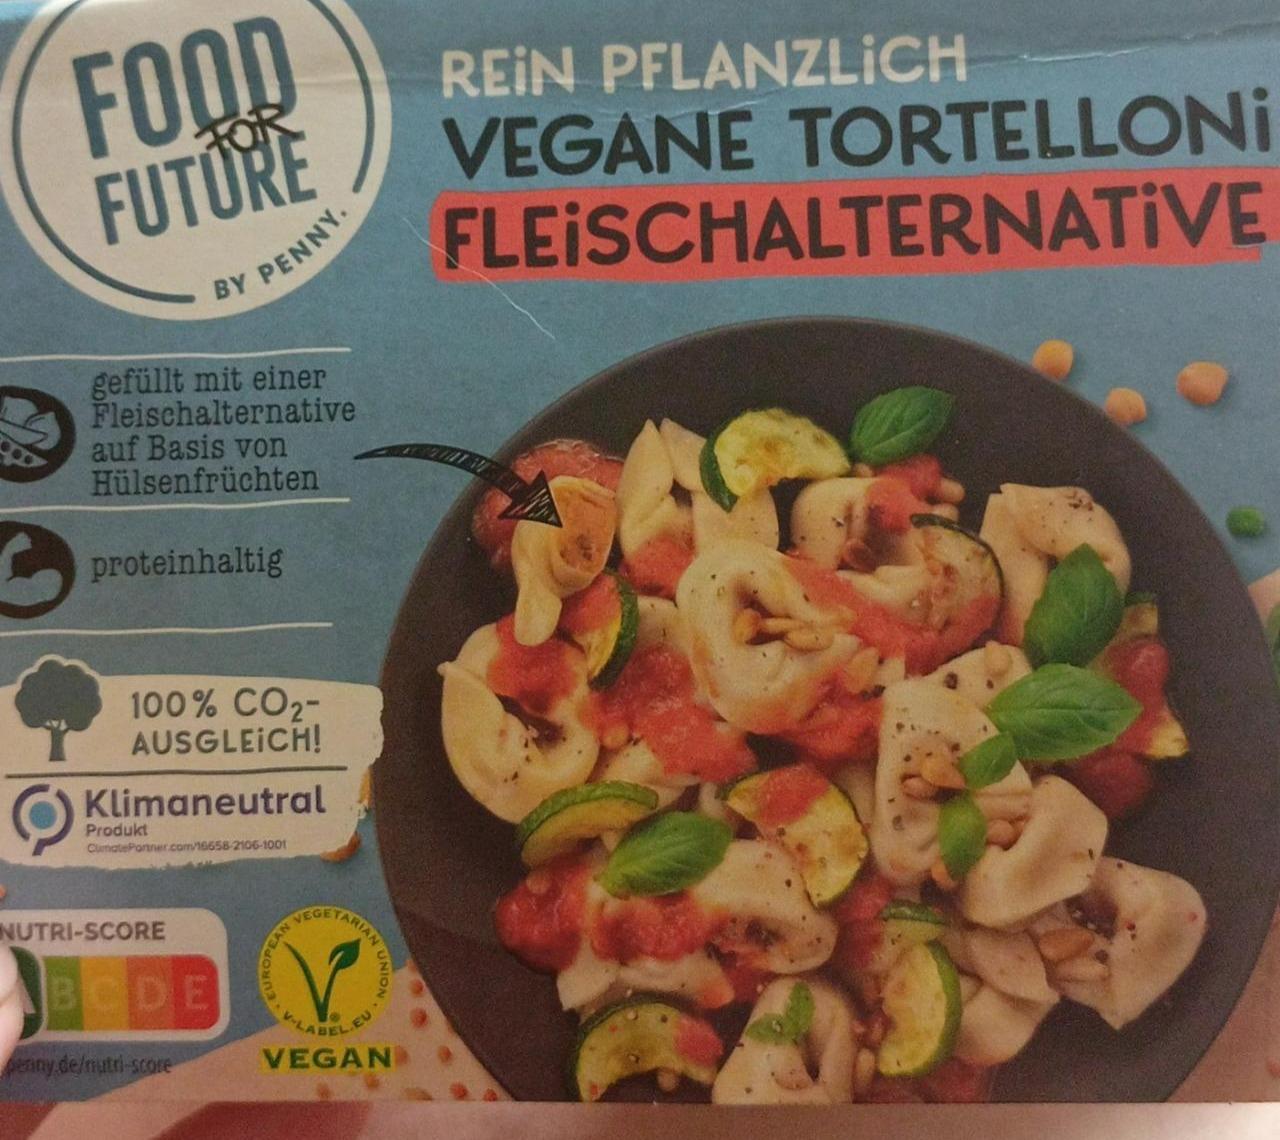 Fotografie - Vegane tortelloni fleischalternative Food for Future